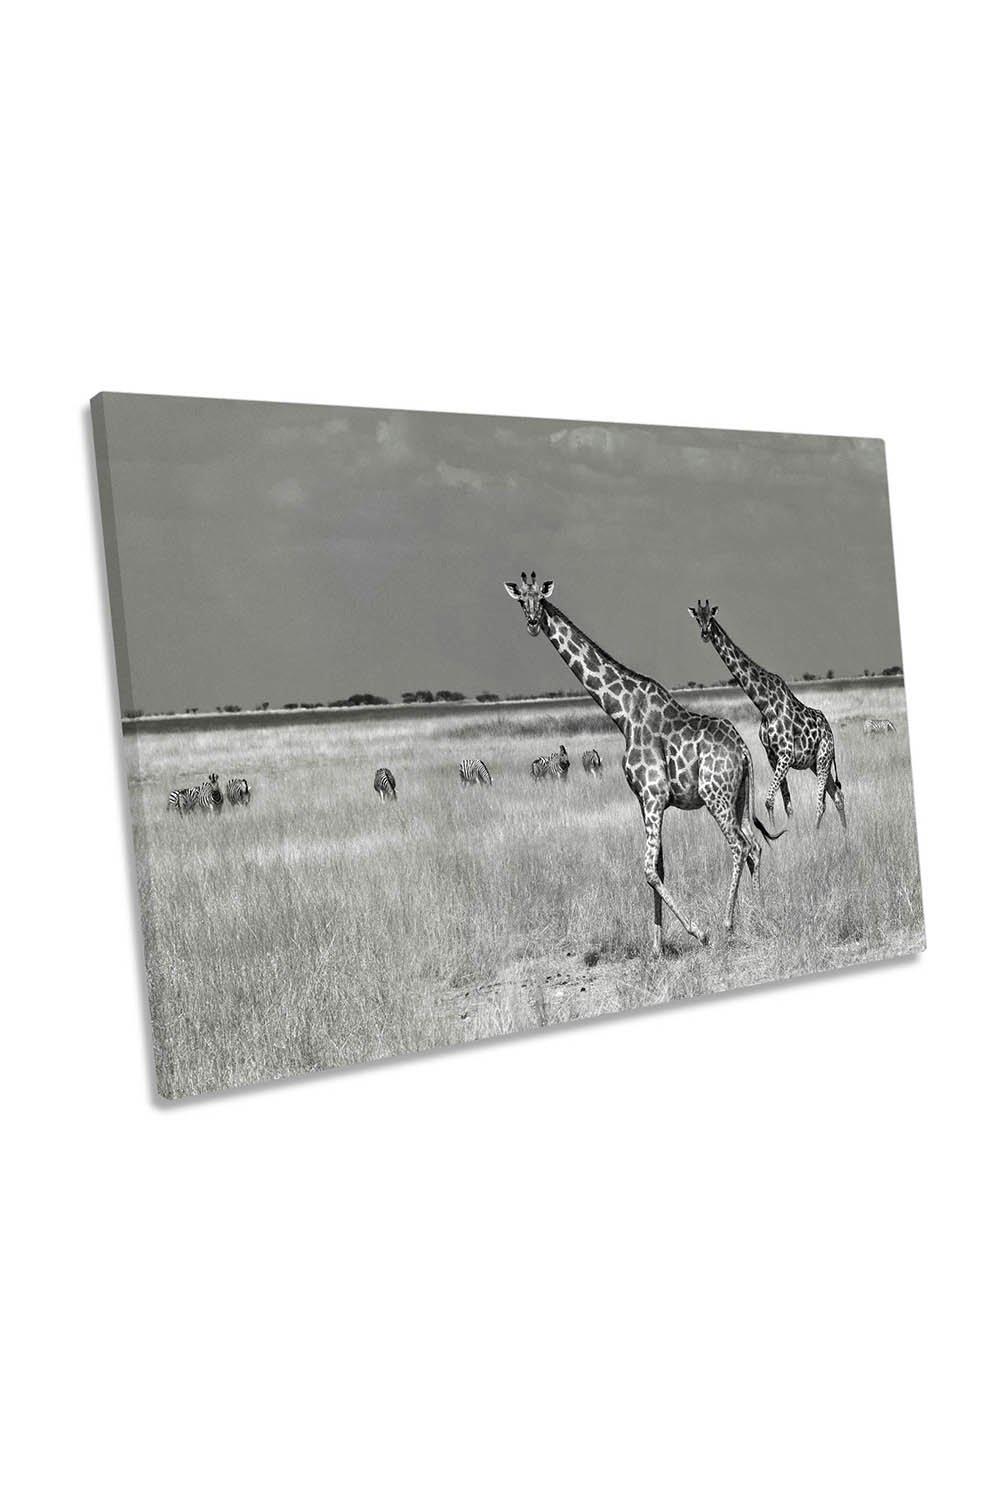 Giraffe Wildlife Nature Canvas Wall Art Picture Print